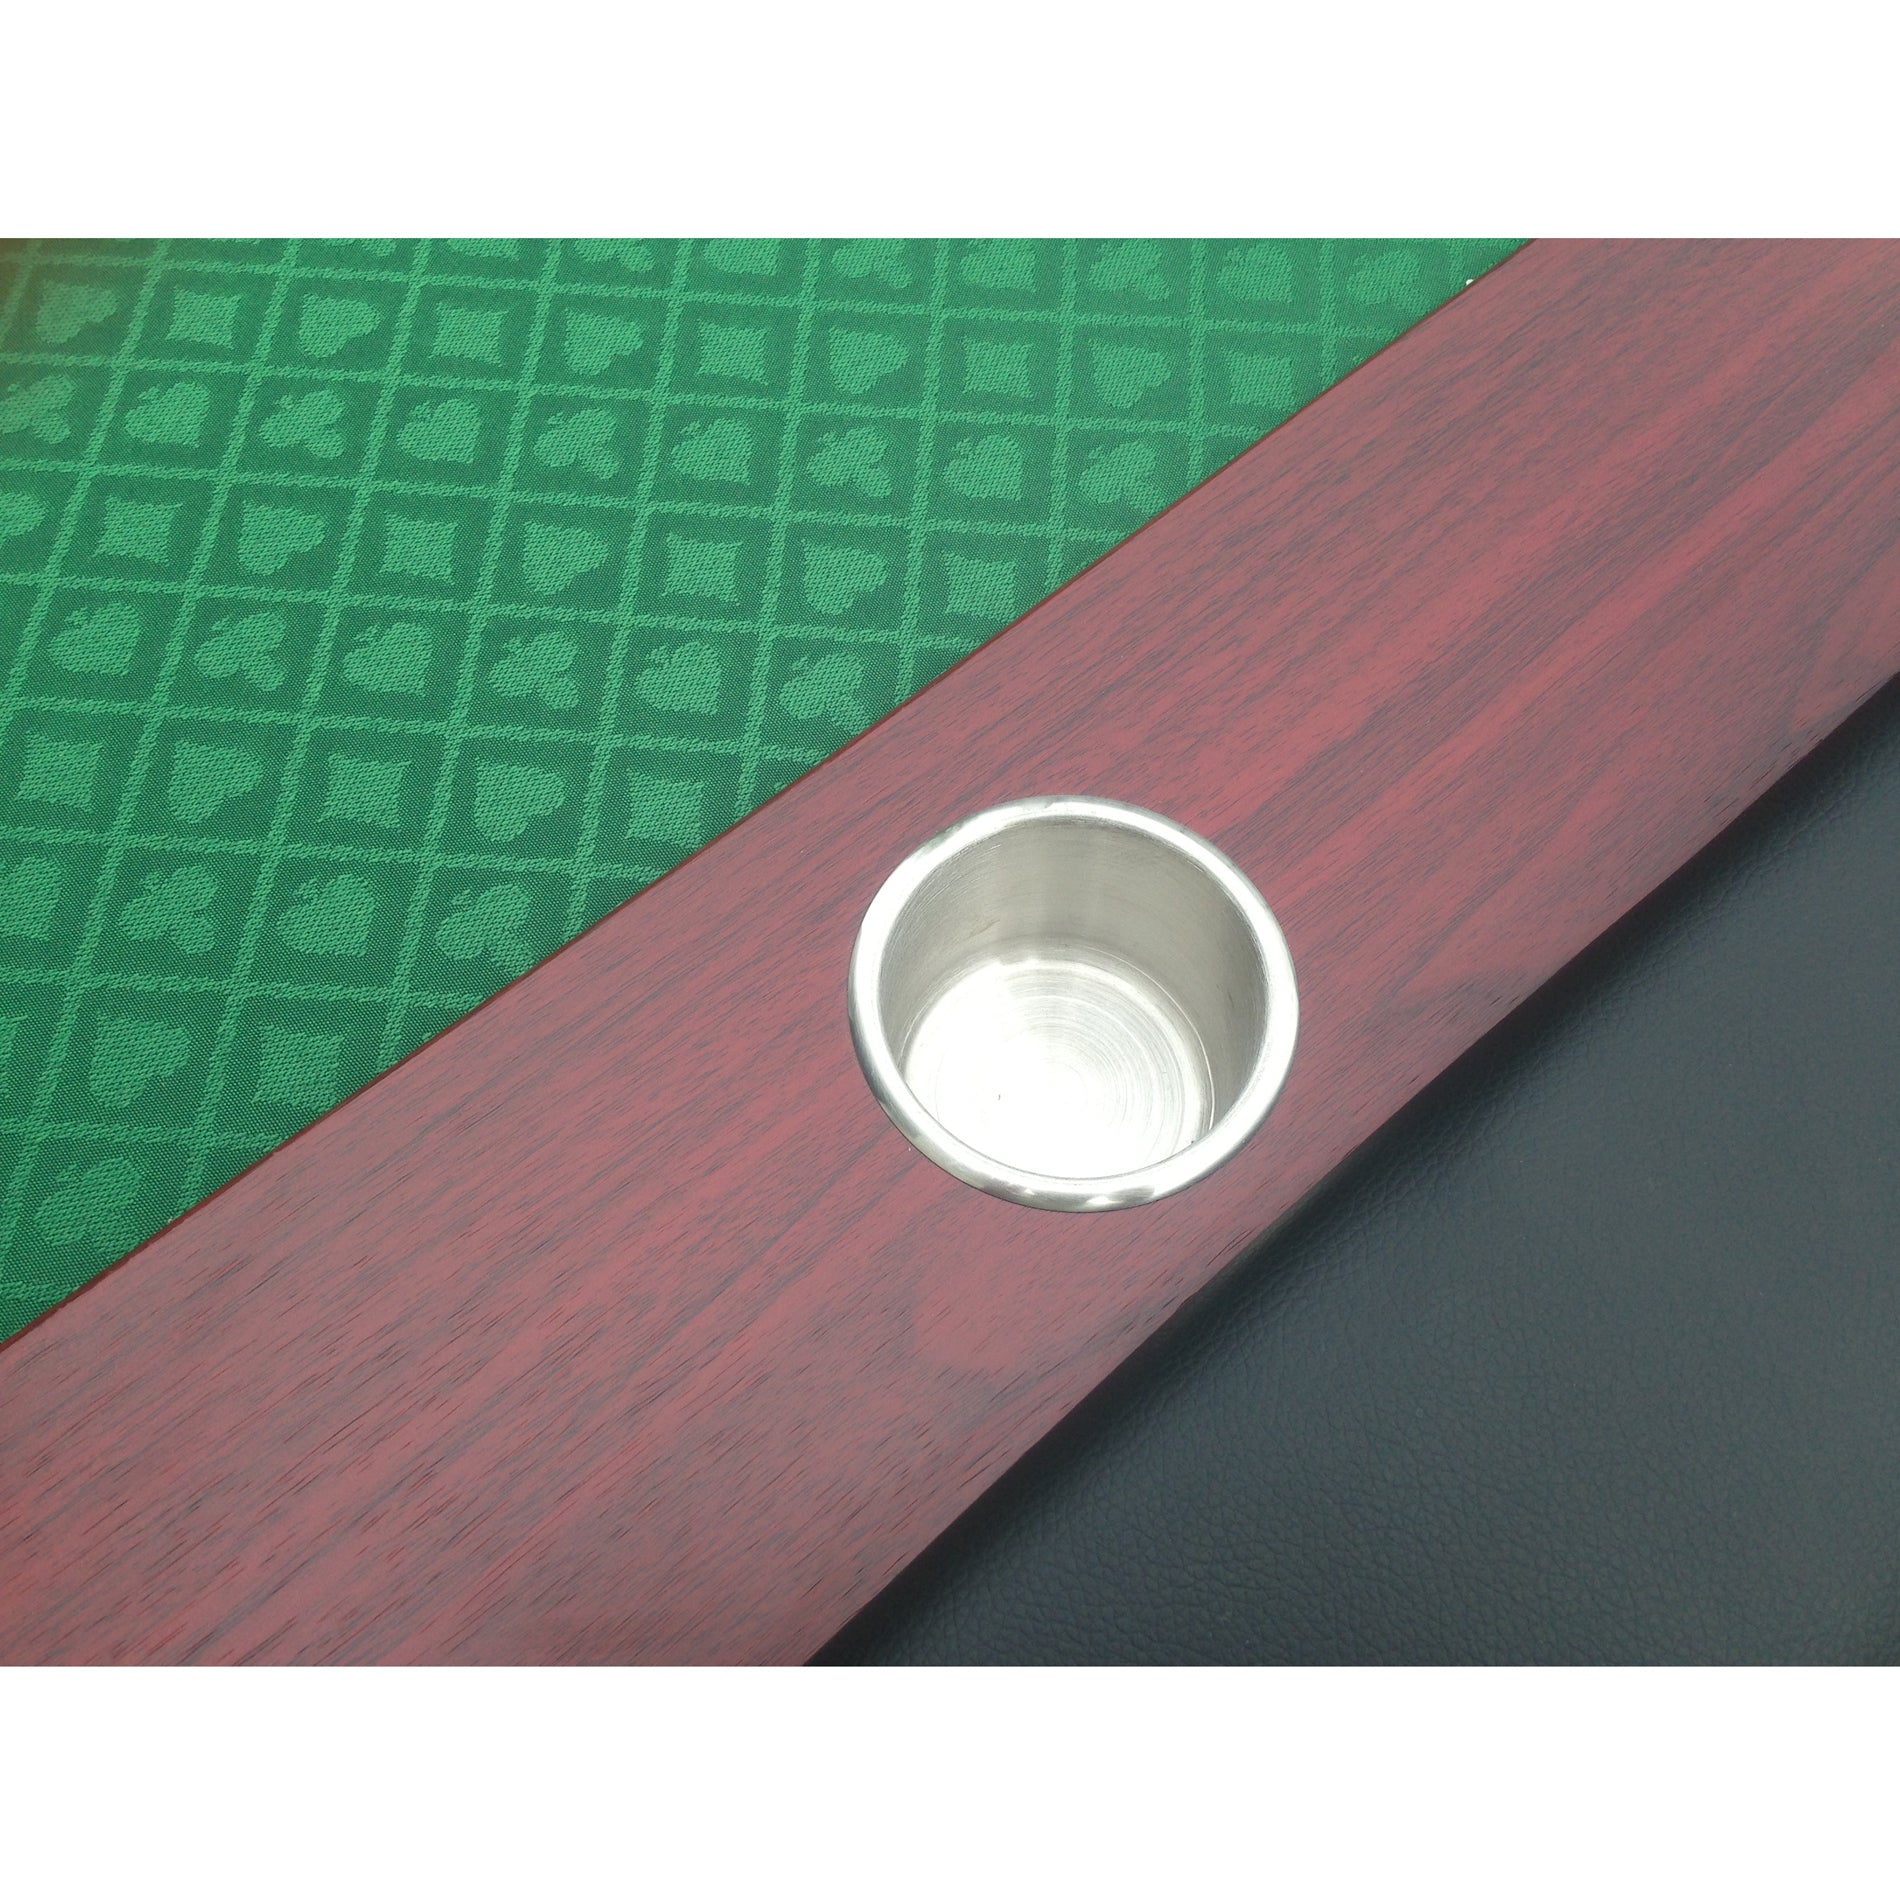 96Inch Luna Green Felt Poker Table Drop Box green-wood